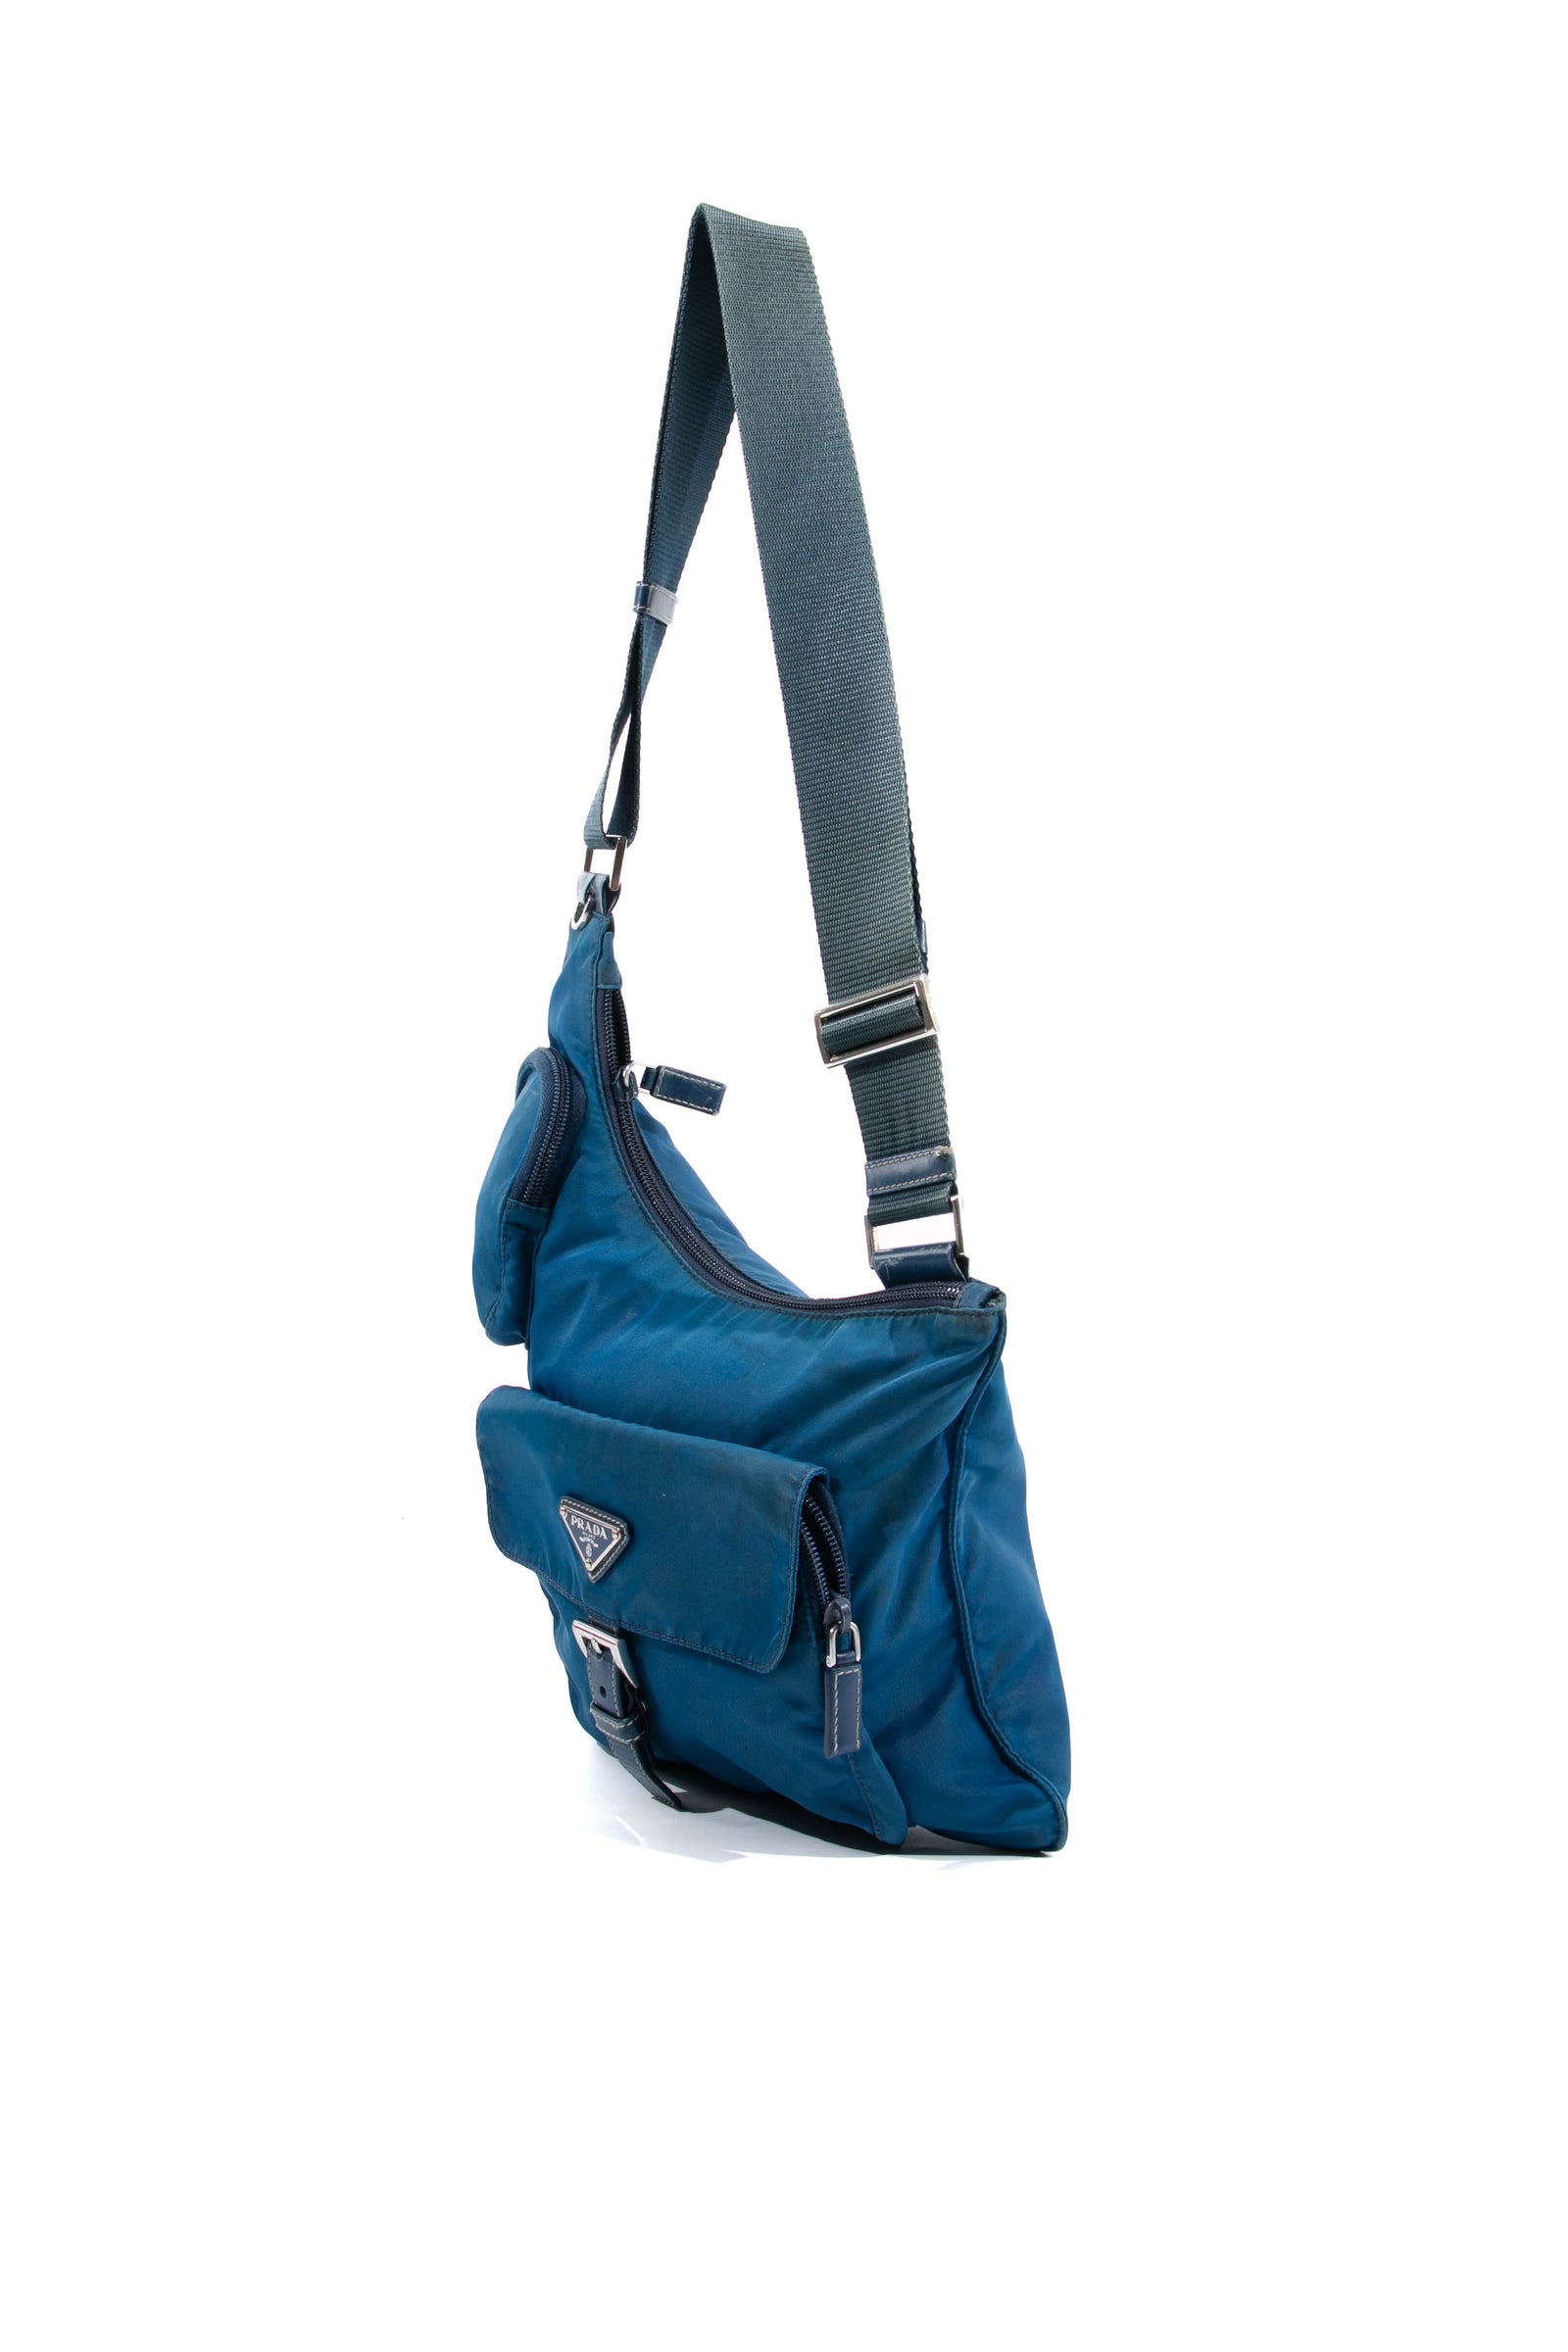 Prada 100% Canvas Blue Cahier Crossbody Bag One Size - 25% off